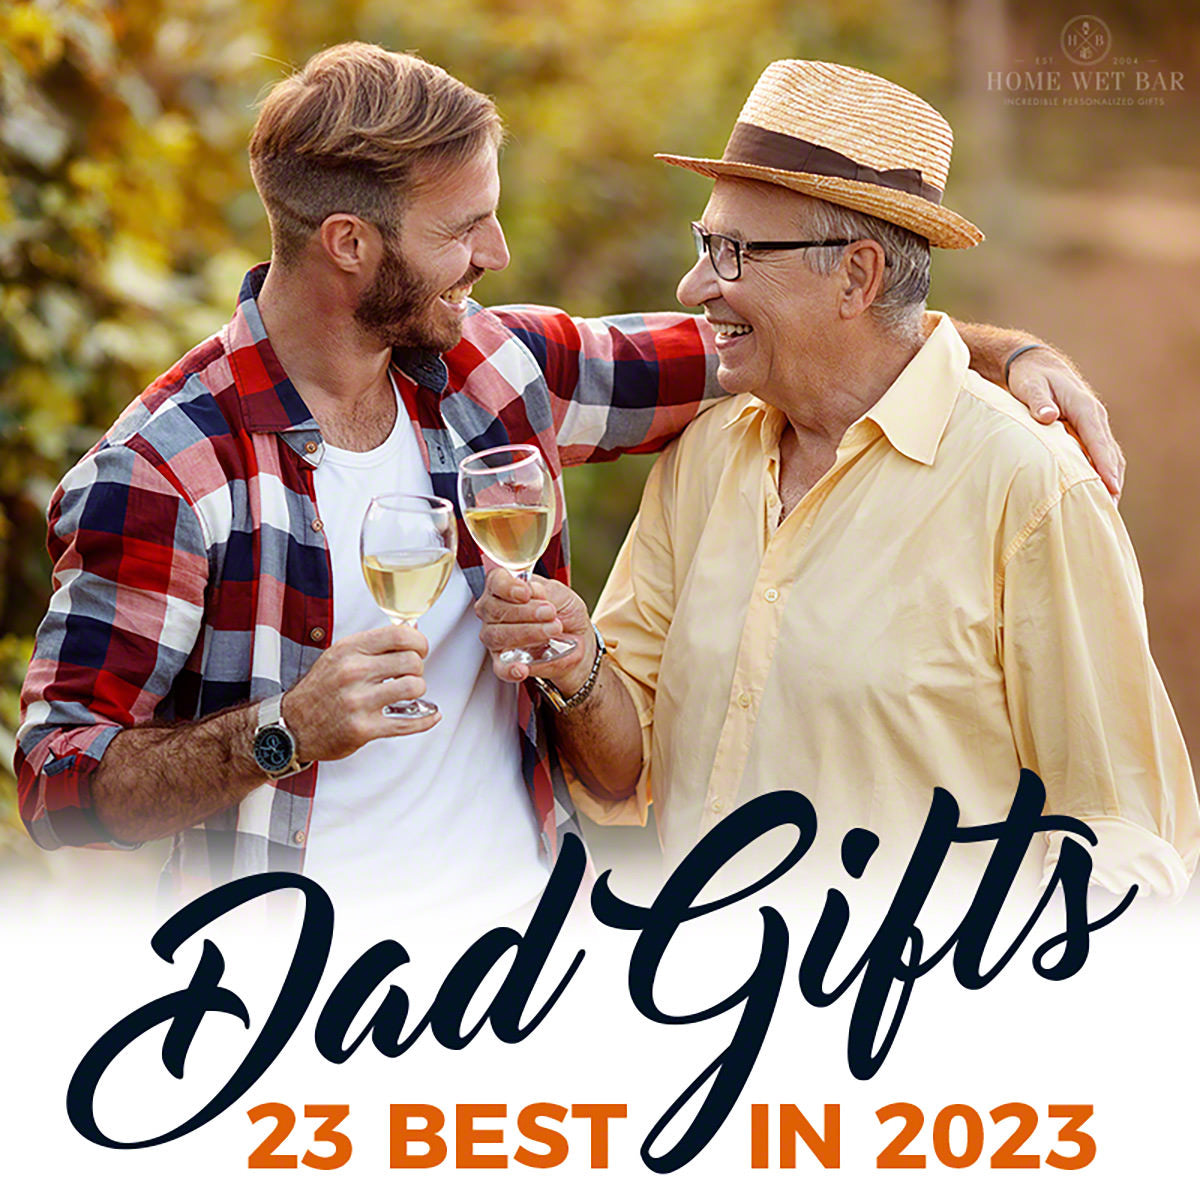 https://www.homewetbar.com/blog/wp-content/uploads/2018/05/23-best-dad-gifts-in-2023.jpg